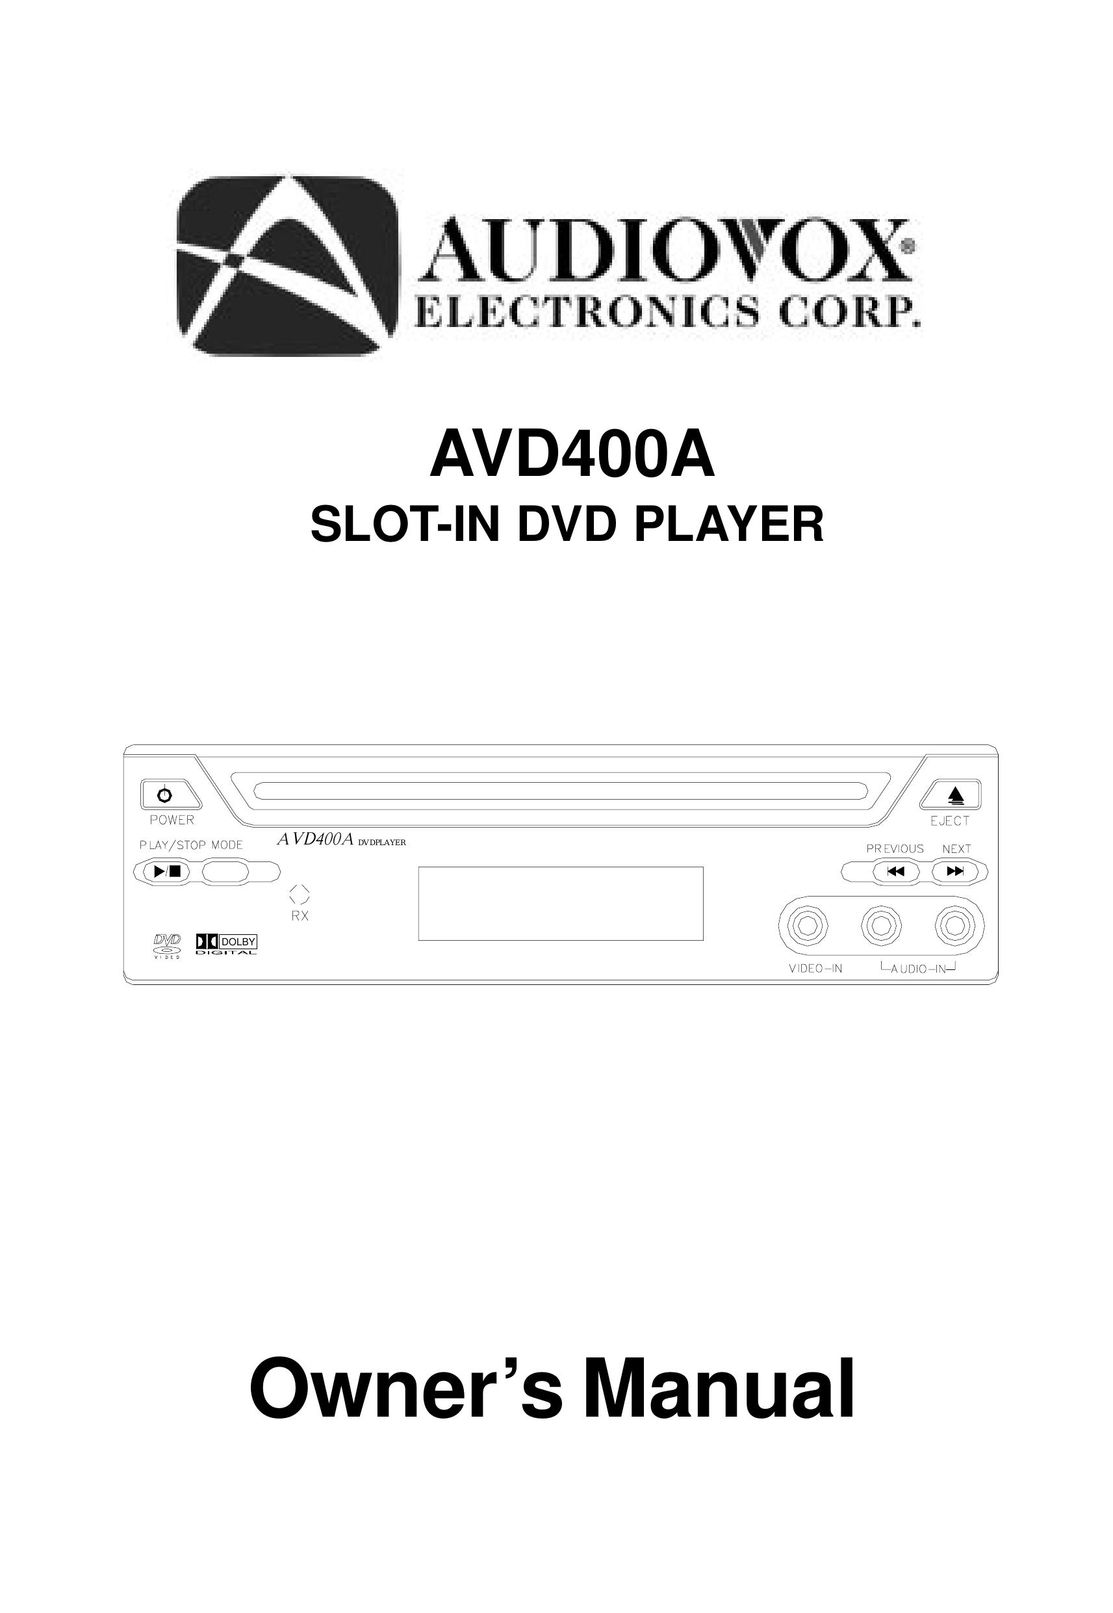 Audiovox AVD400A DVD Player User Manual